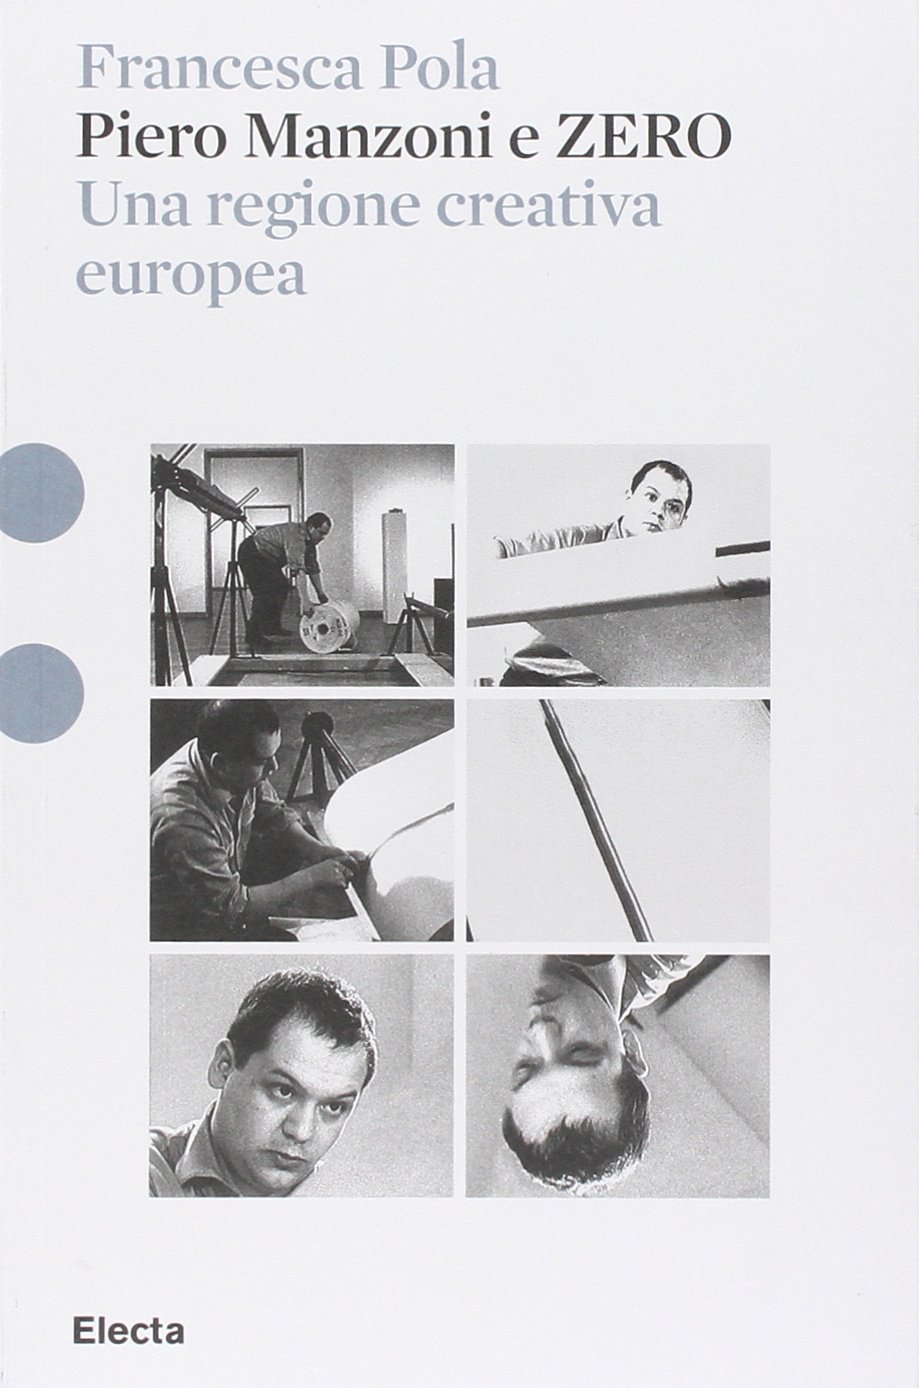 Piero Manzoni and ZERO – A European Creative Region